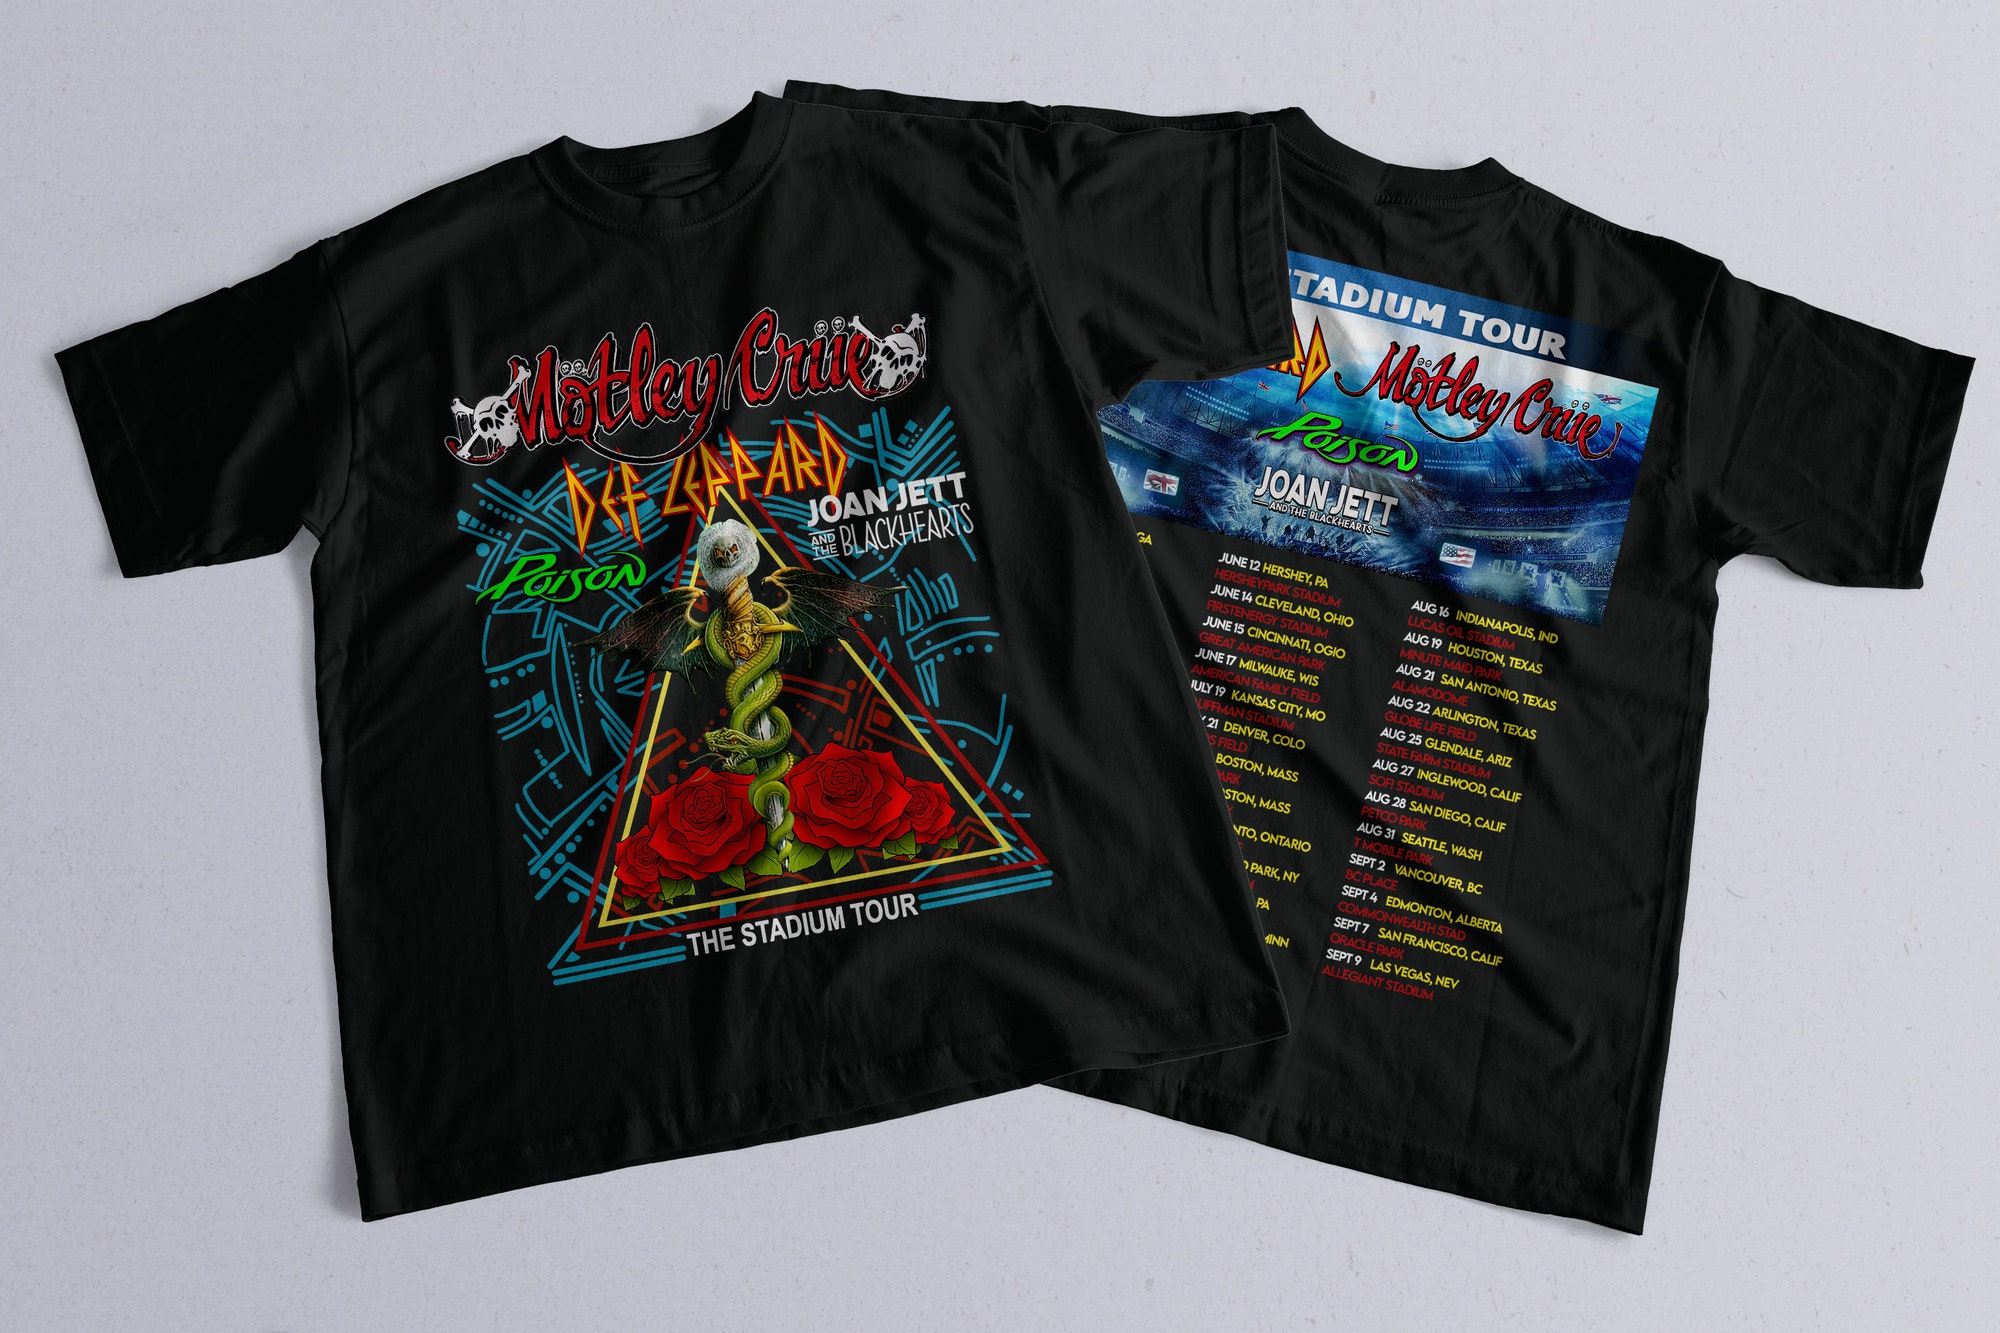 The Stadium Tour 2022 Music Concert Def Leppard Motley Crue Poison Joan Jett & the Blackhearts T Shirt